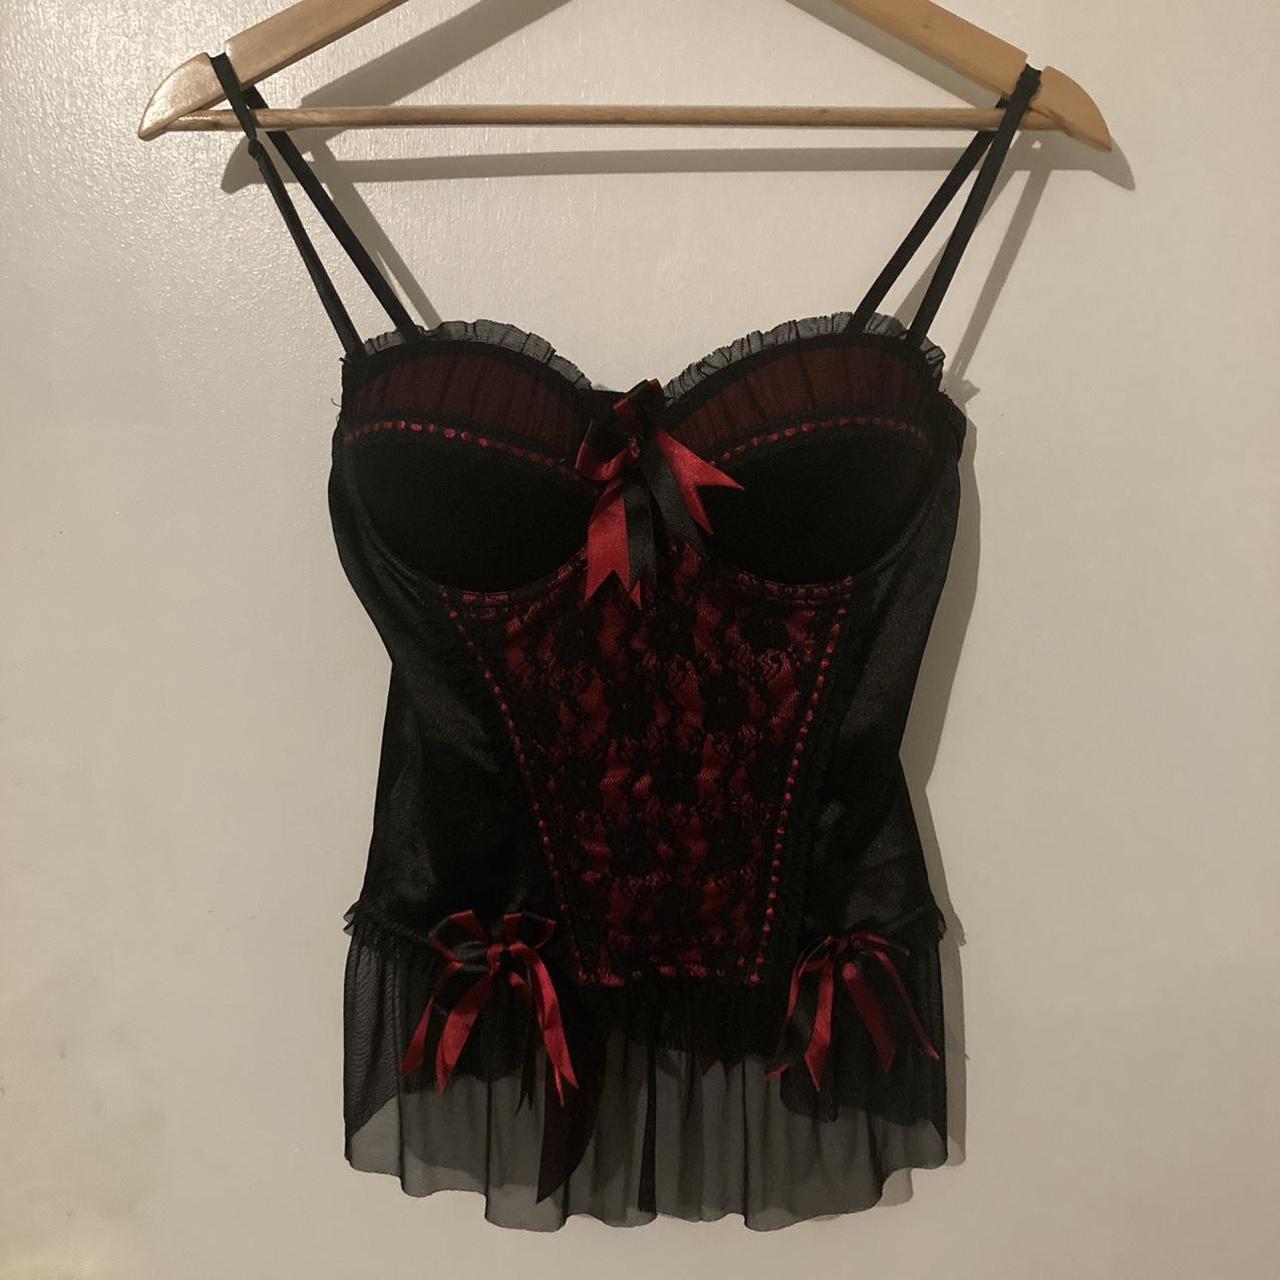 Vampire bustier / corset / lingerie top Perfect for - Depop